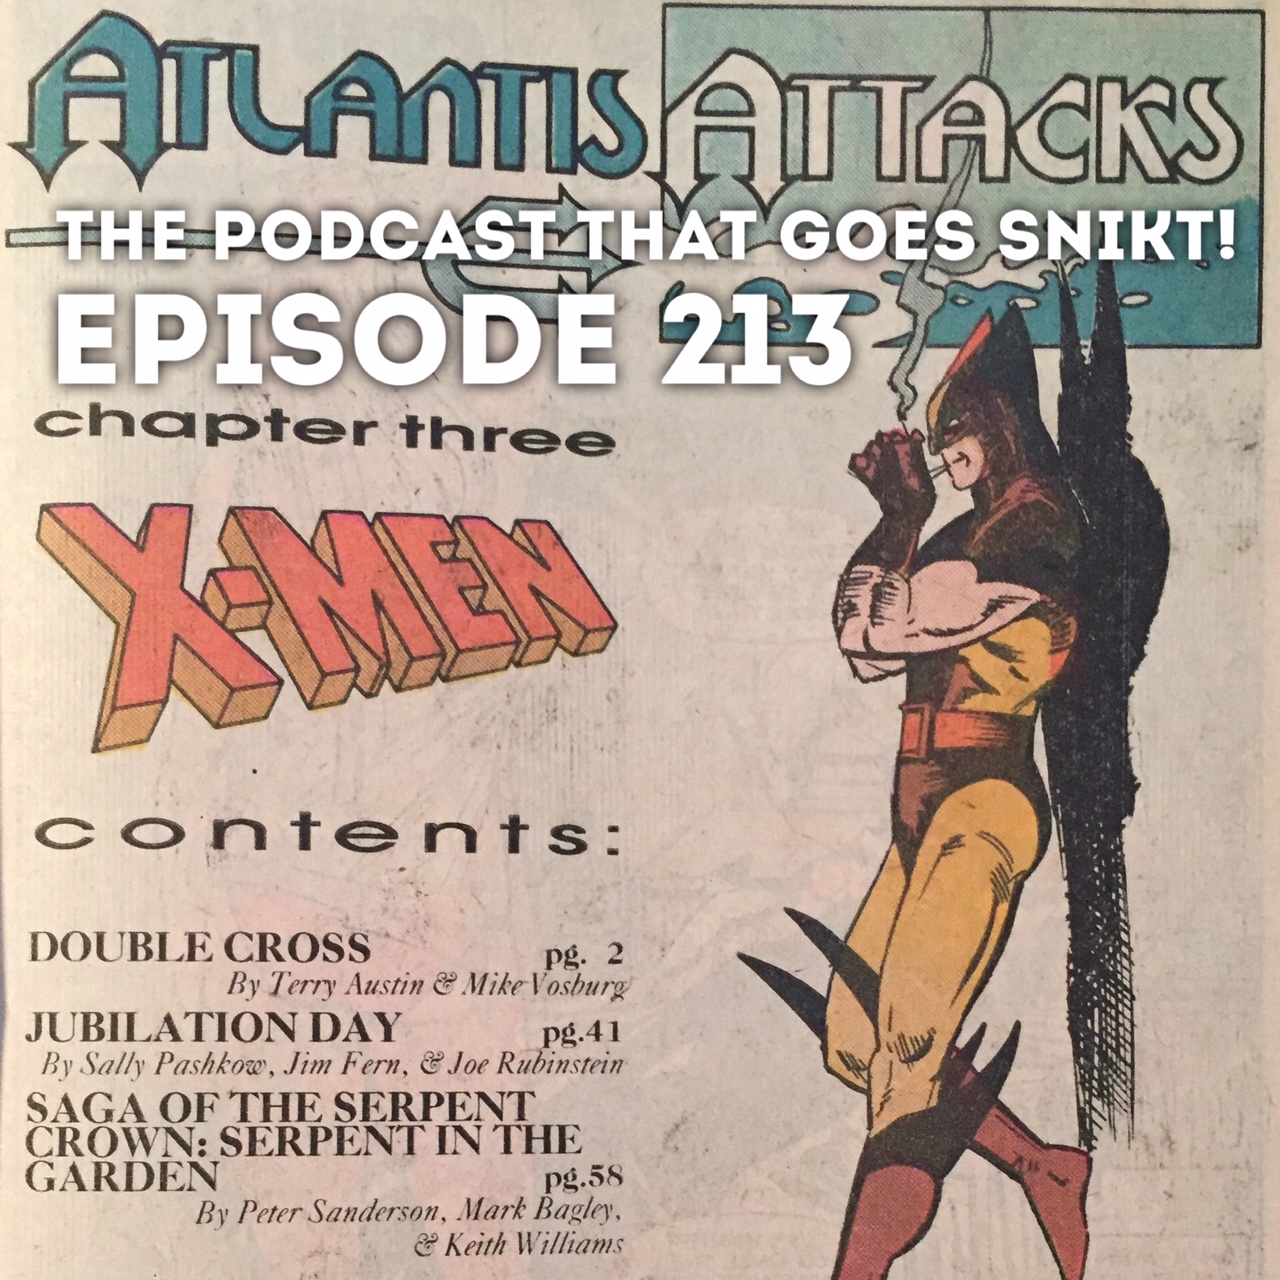 Episode 213-Flashback! Atlantis Attacks!